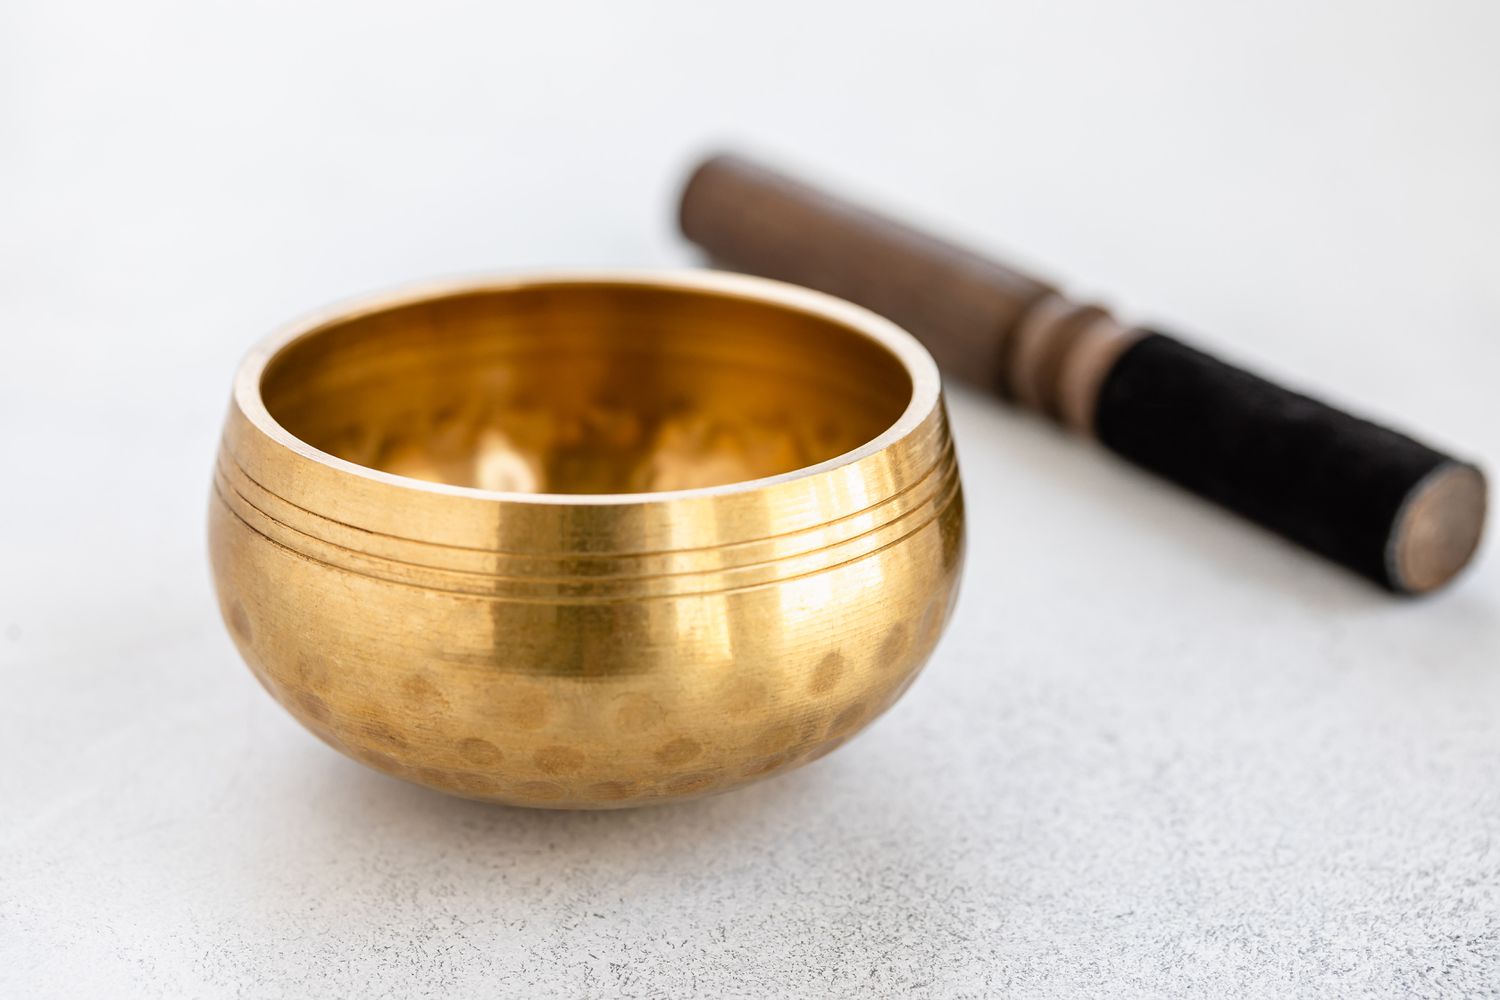 Gold metal bowl next to stick for sound vibration